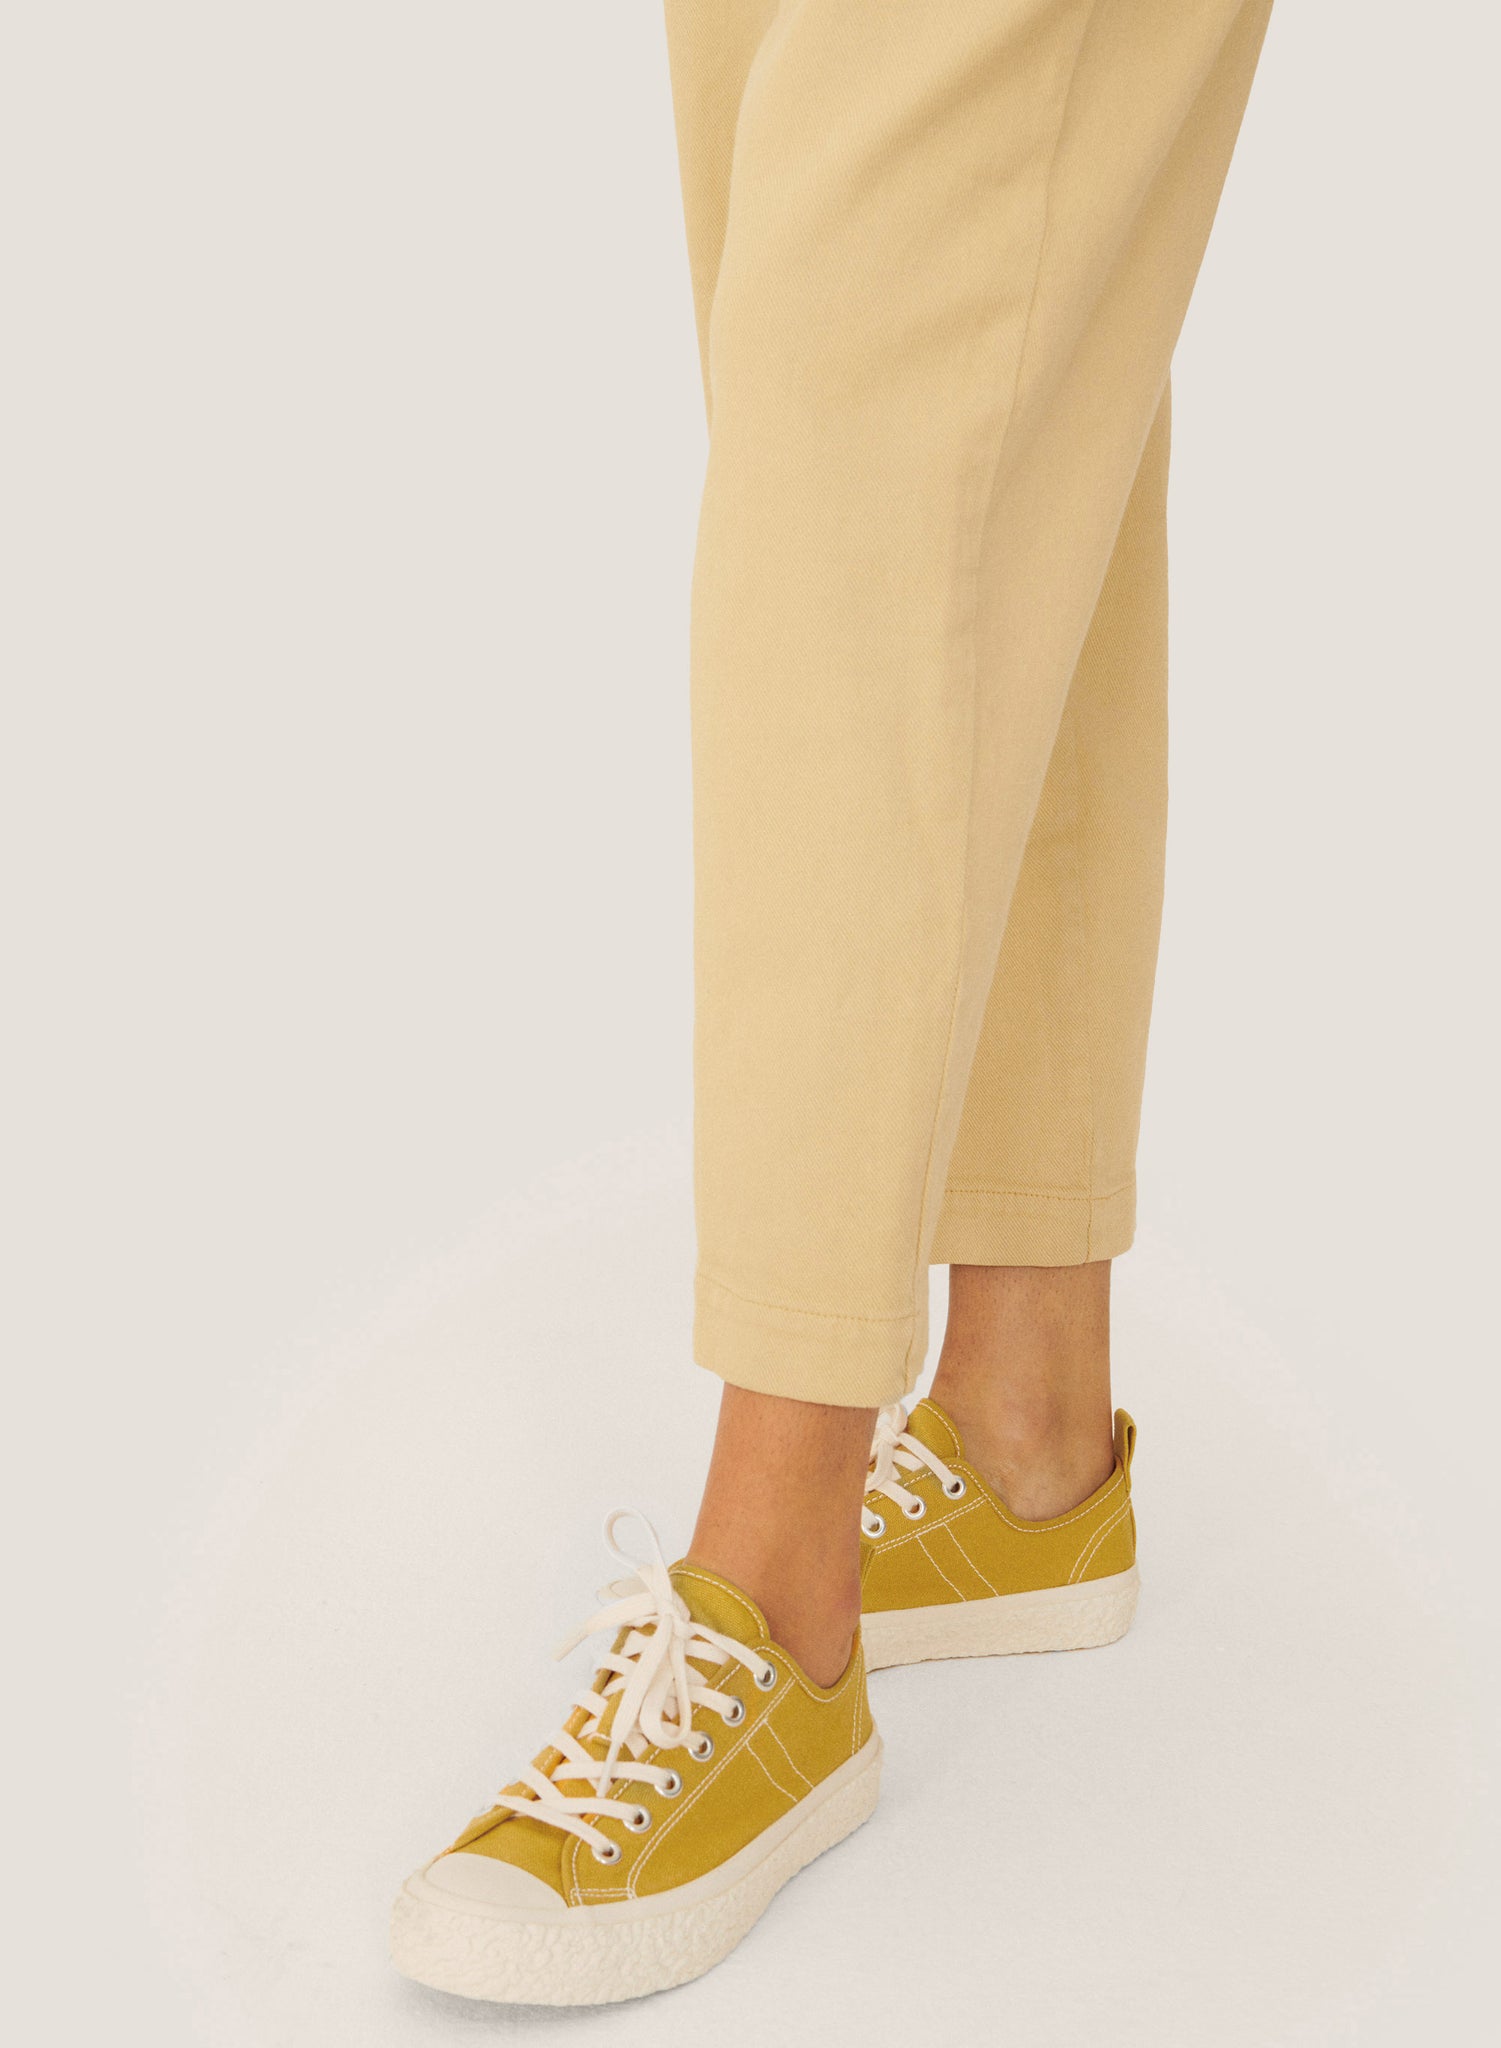 YMC Low Top Sneaker Yellow